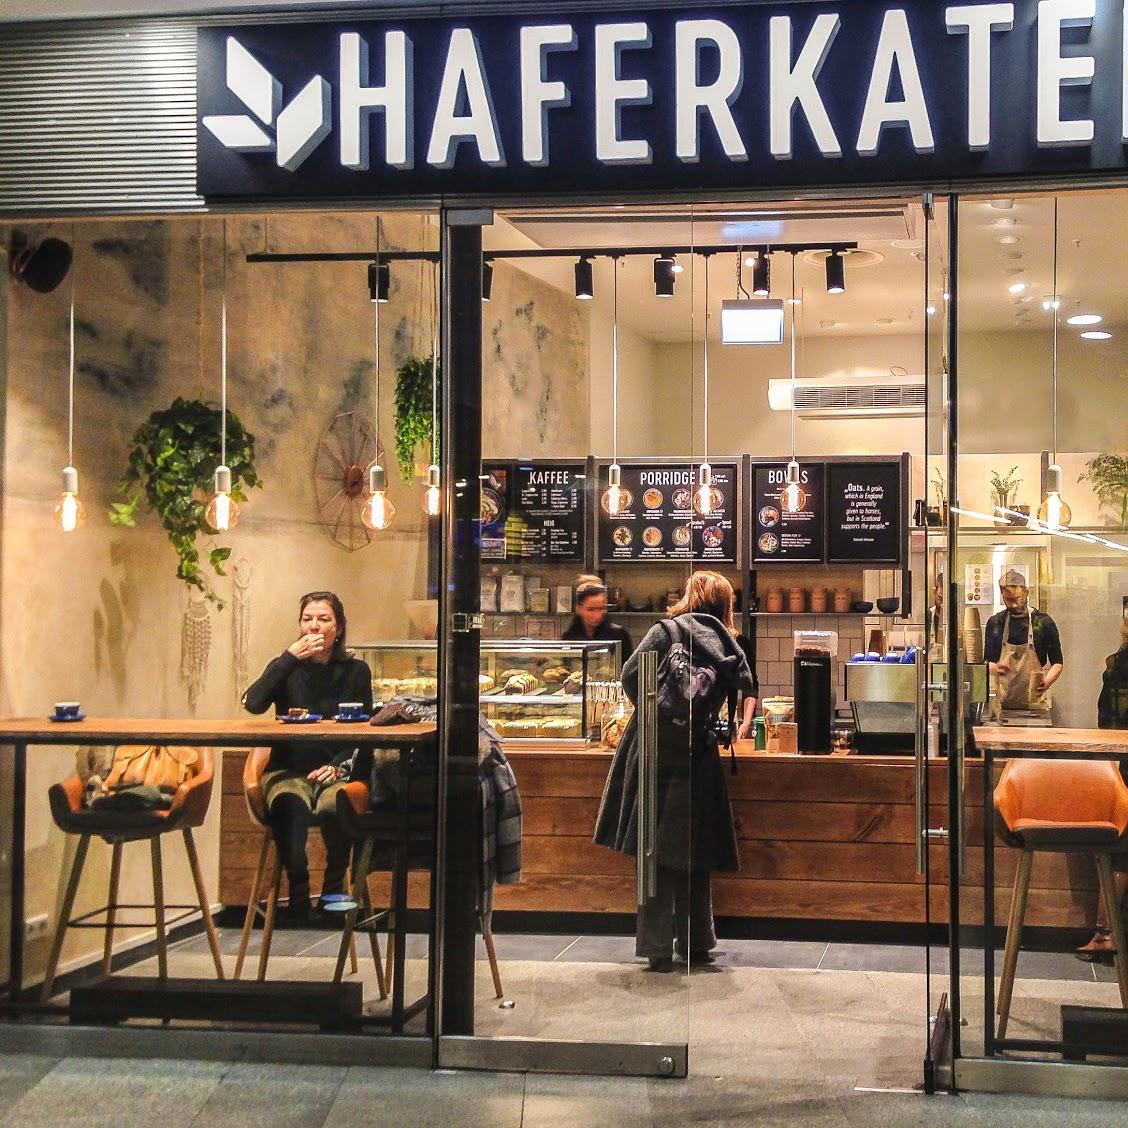 Restaurant "Café Haferkater, Friedrichstraße" in Berlin